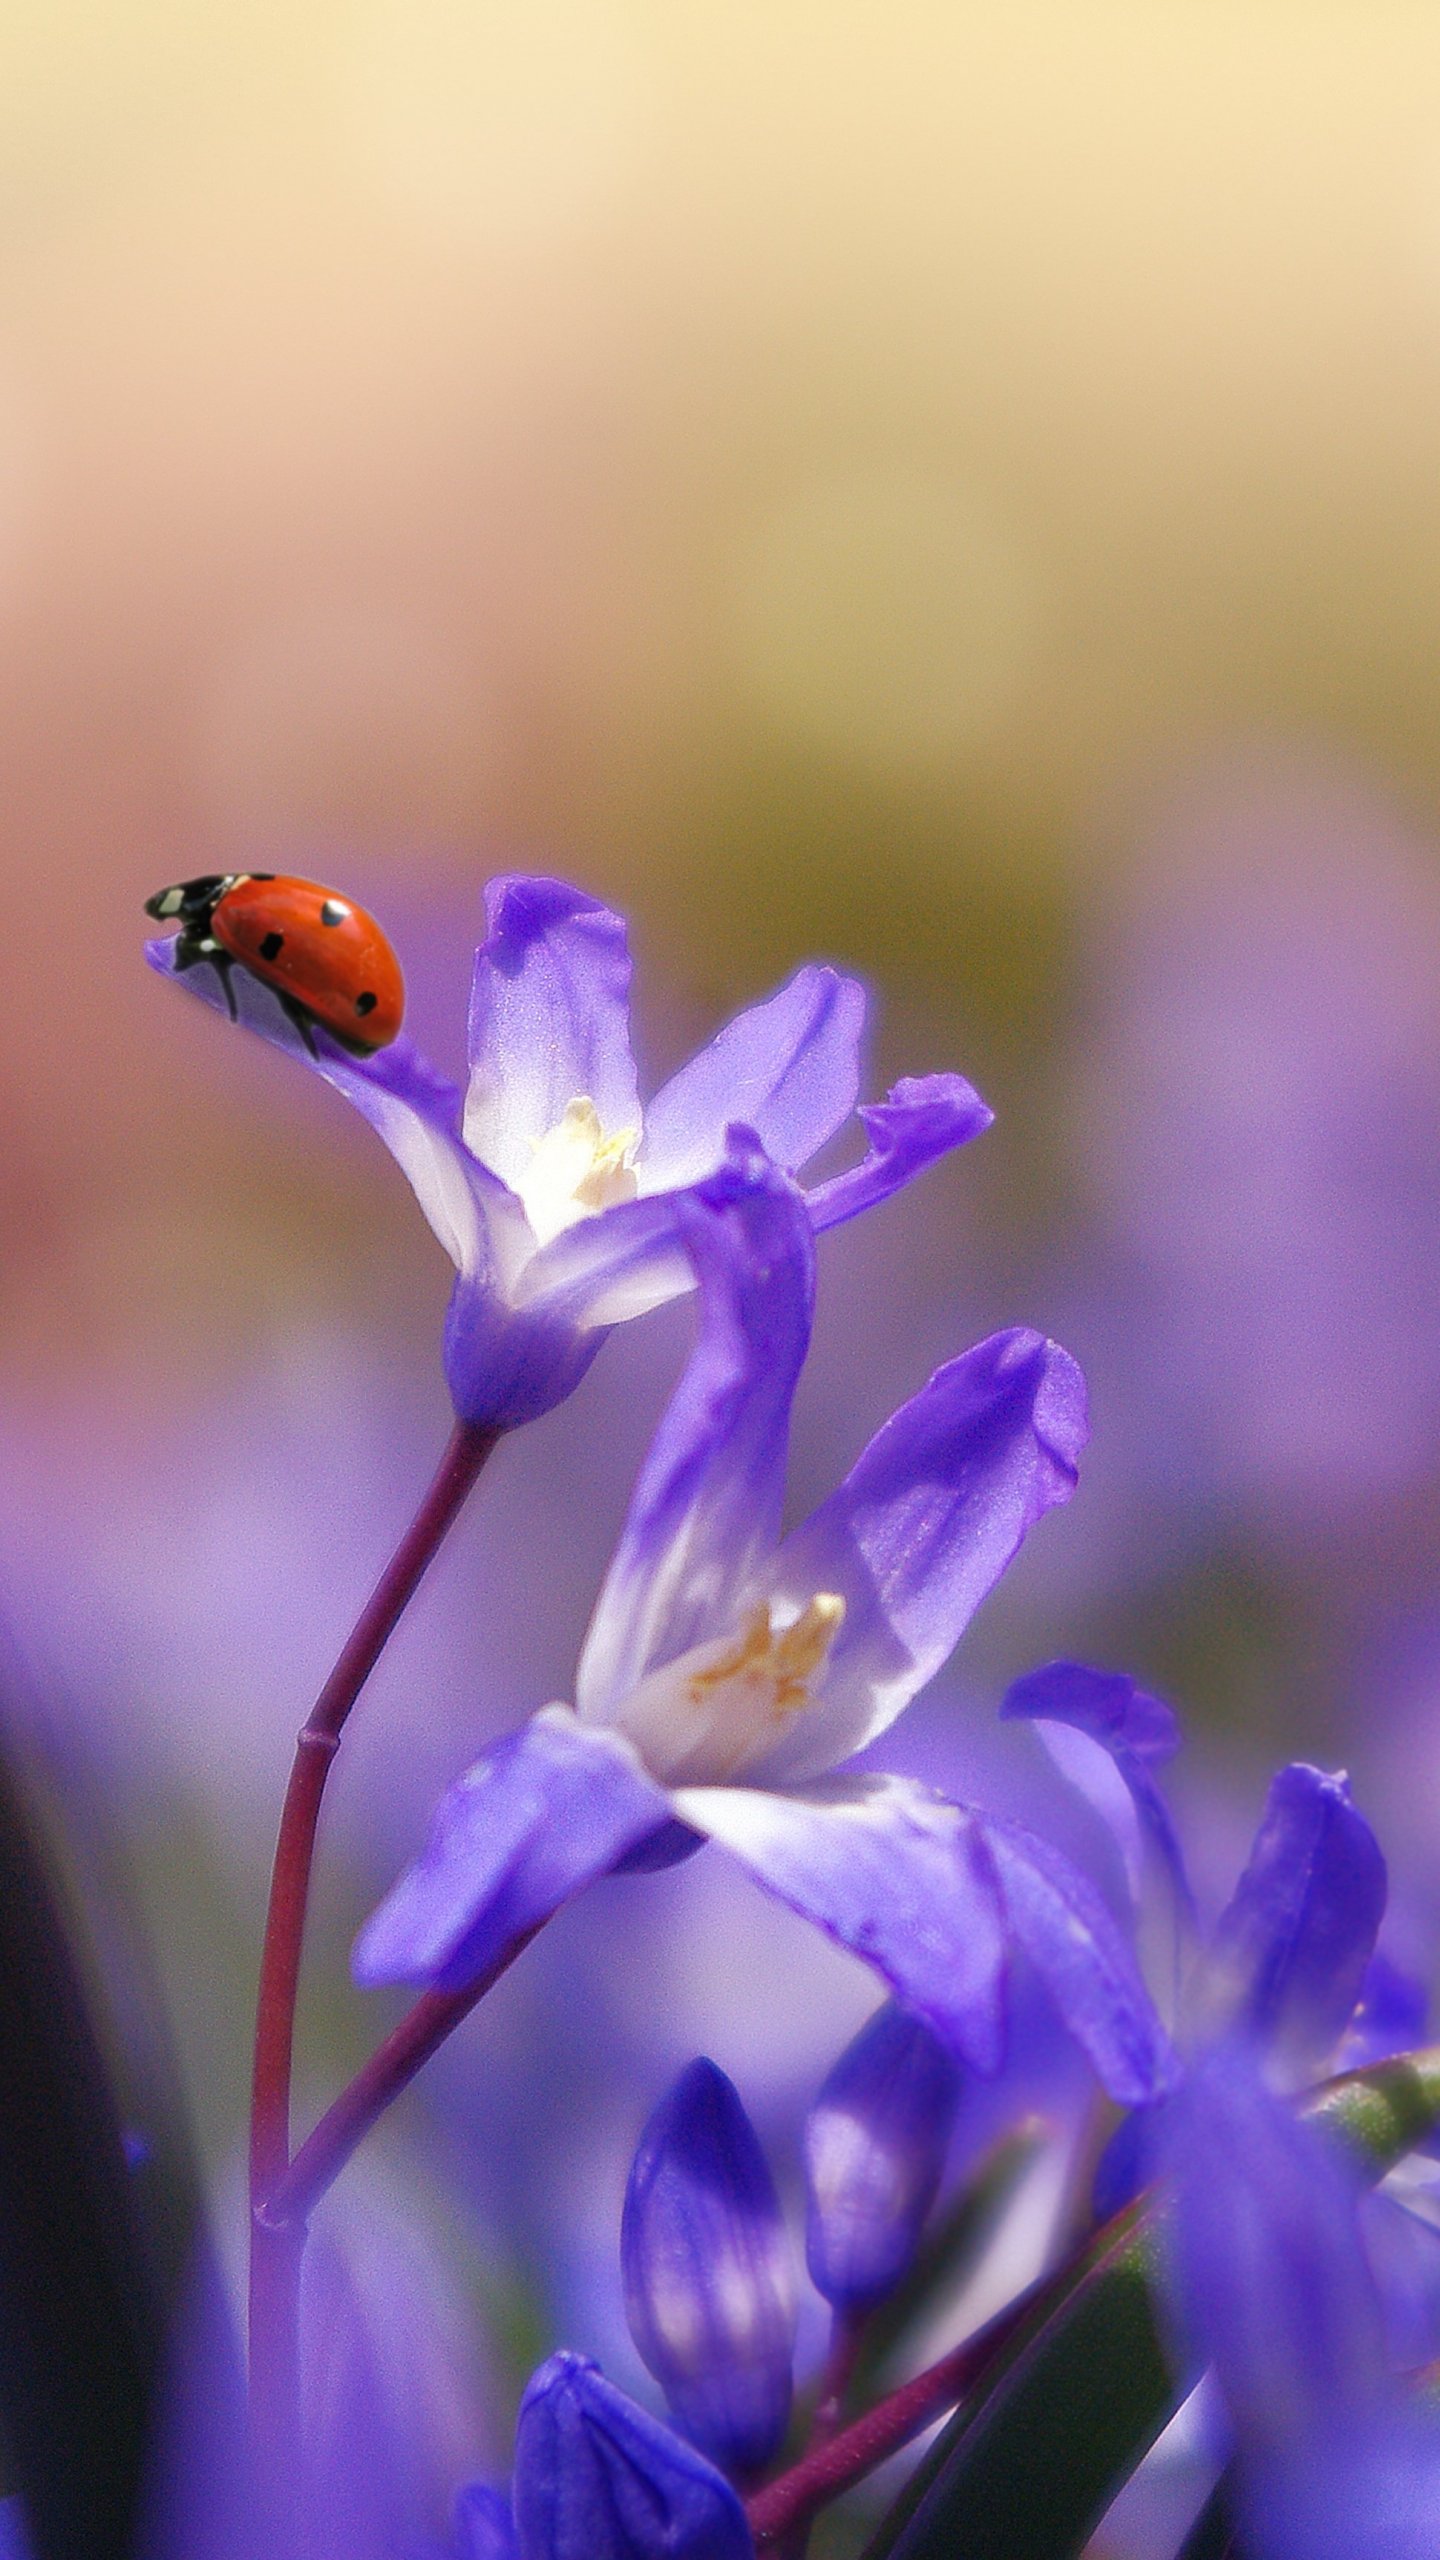 Ladybug On Purple Flower Wallpaper iPhone Android Desktop